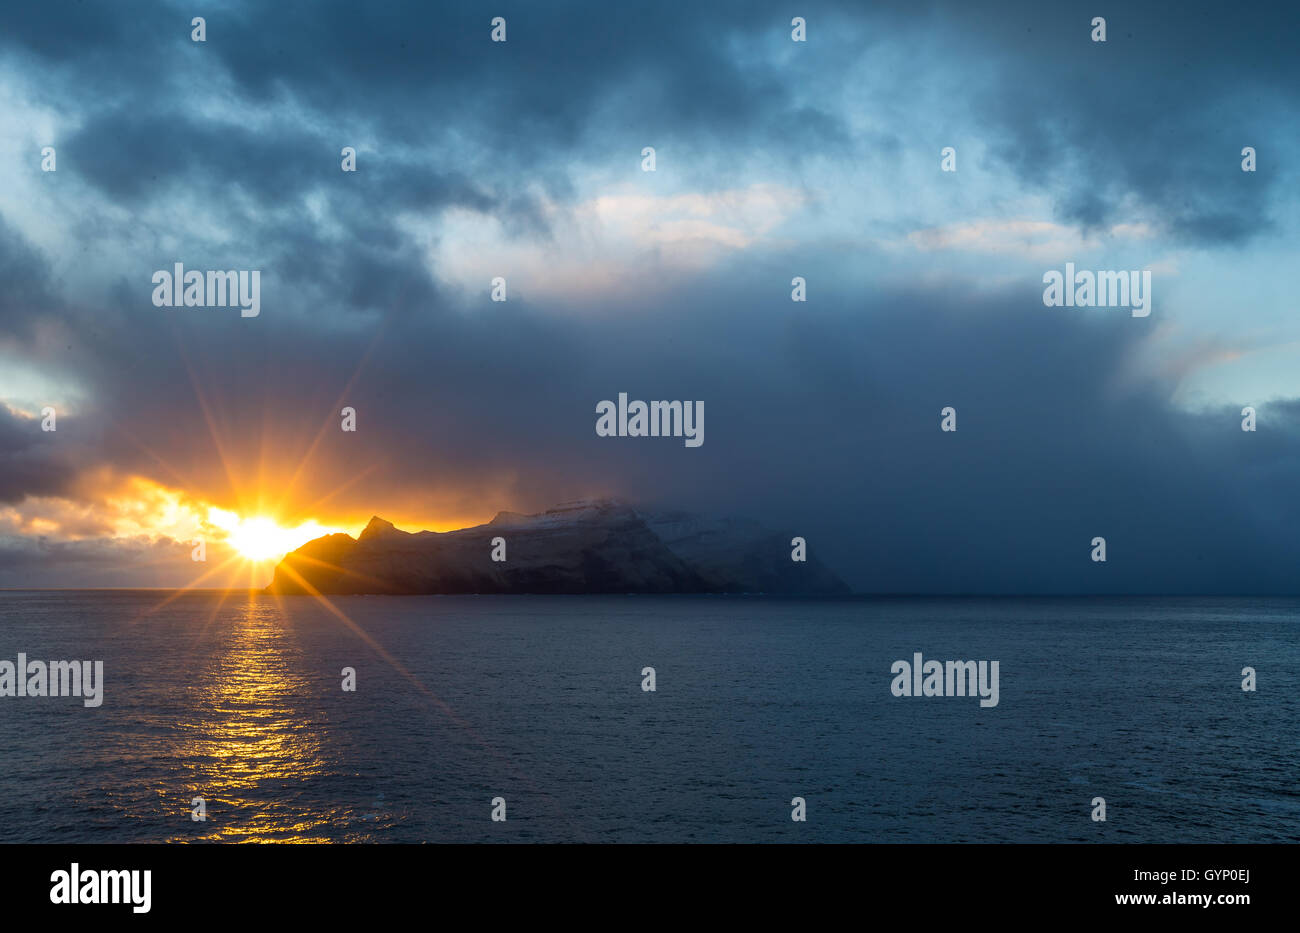 The island of Mykines at sunset, Faroe islands Stock Photo